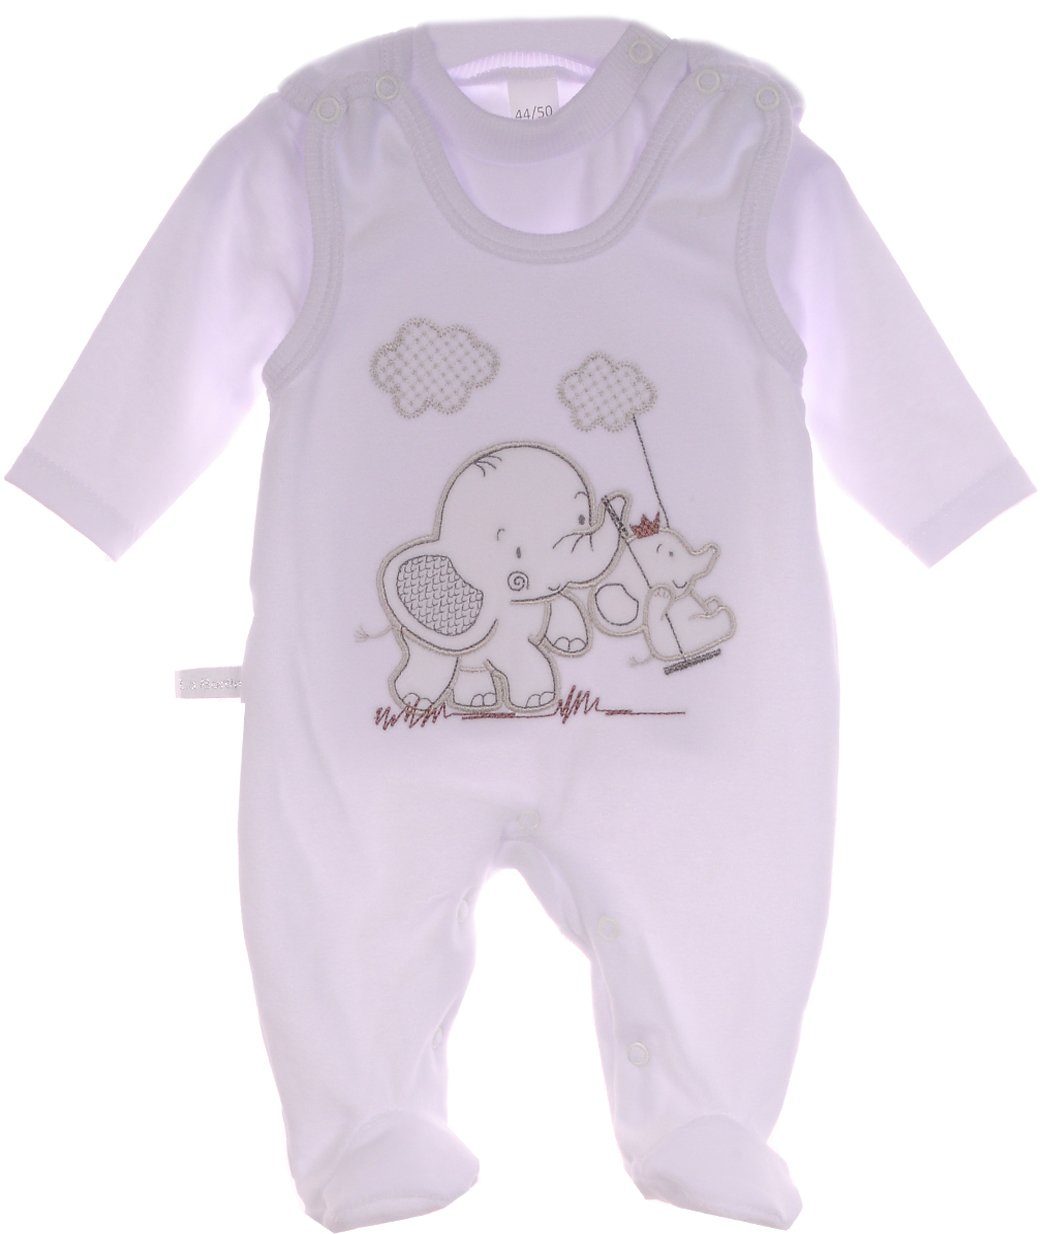 La Bortini Strampler Strampler und Shirt Baby Anzug 50 56 62 68 74 weiß